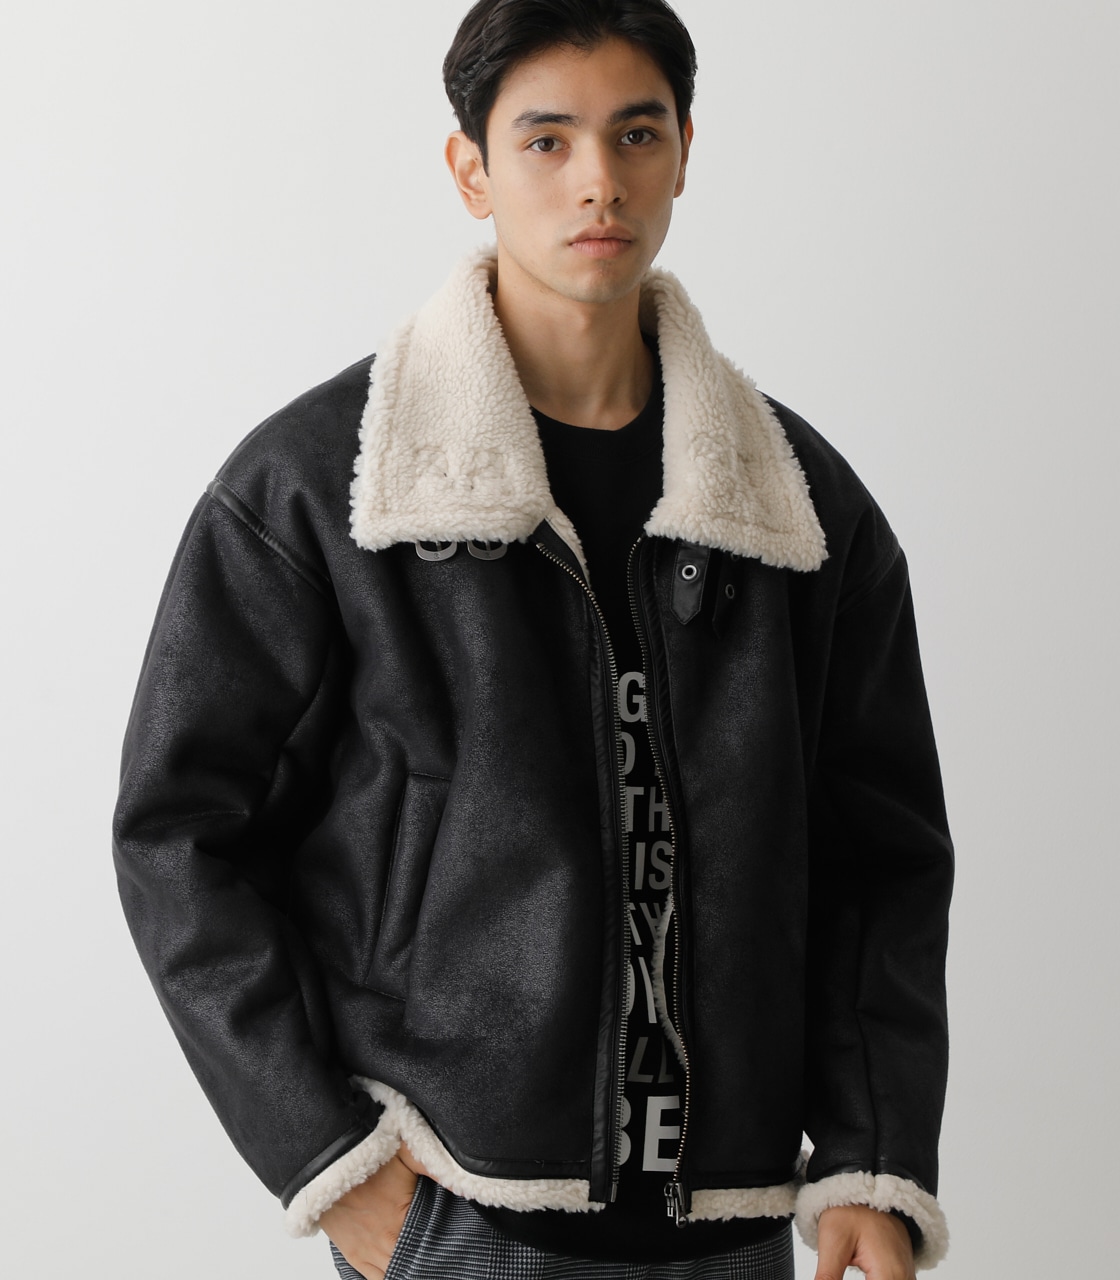 mouton jacket - レザージャケット